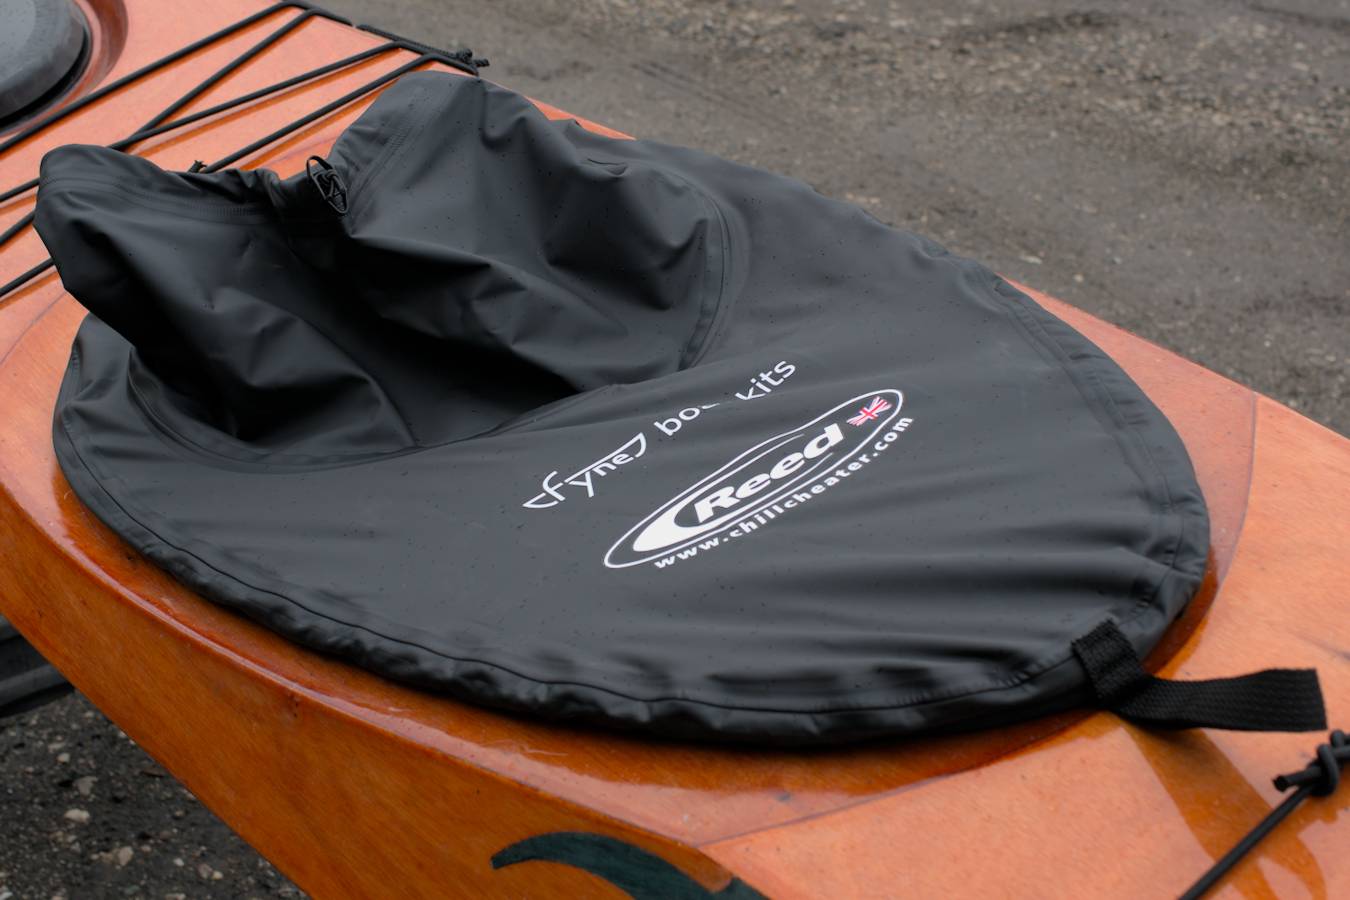 Aquatherm kayak spray deck by Reed Chillcheater